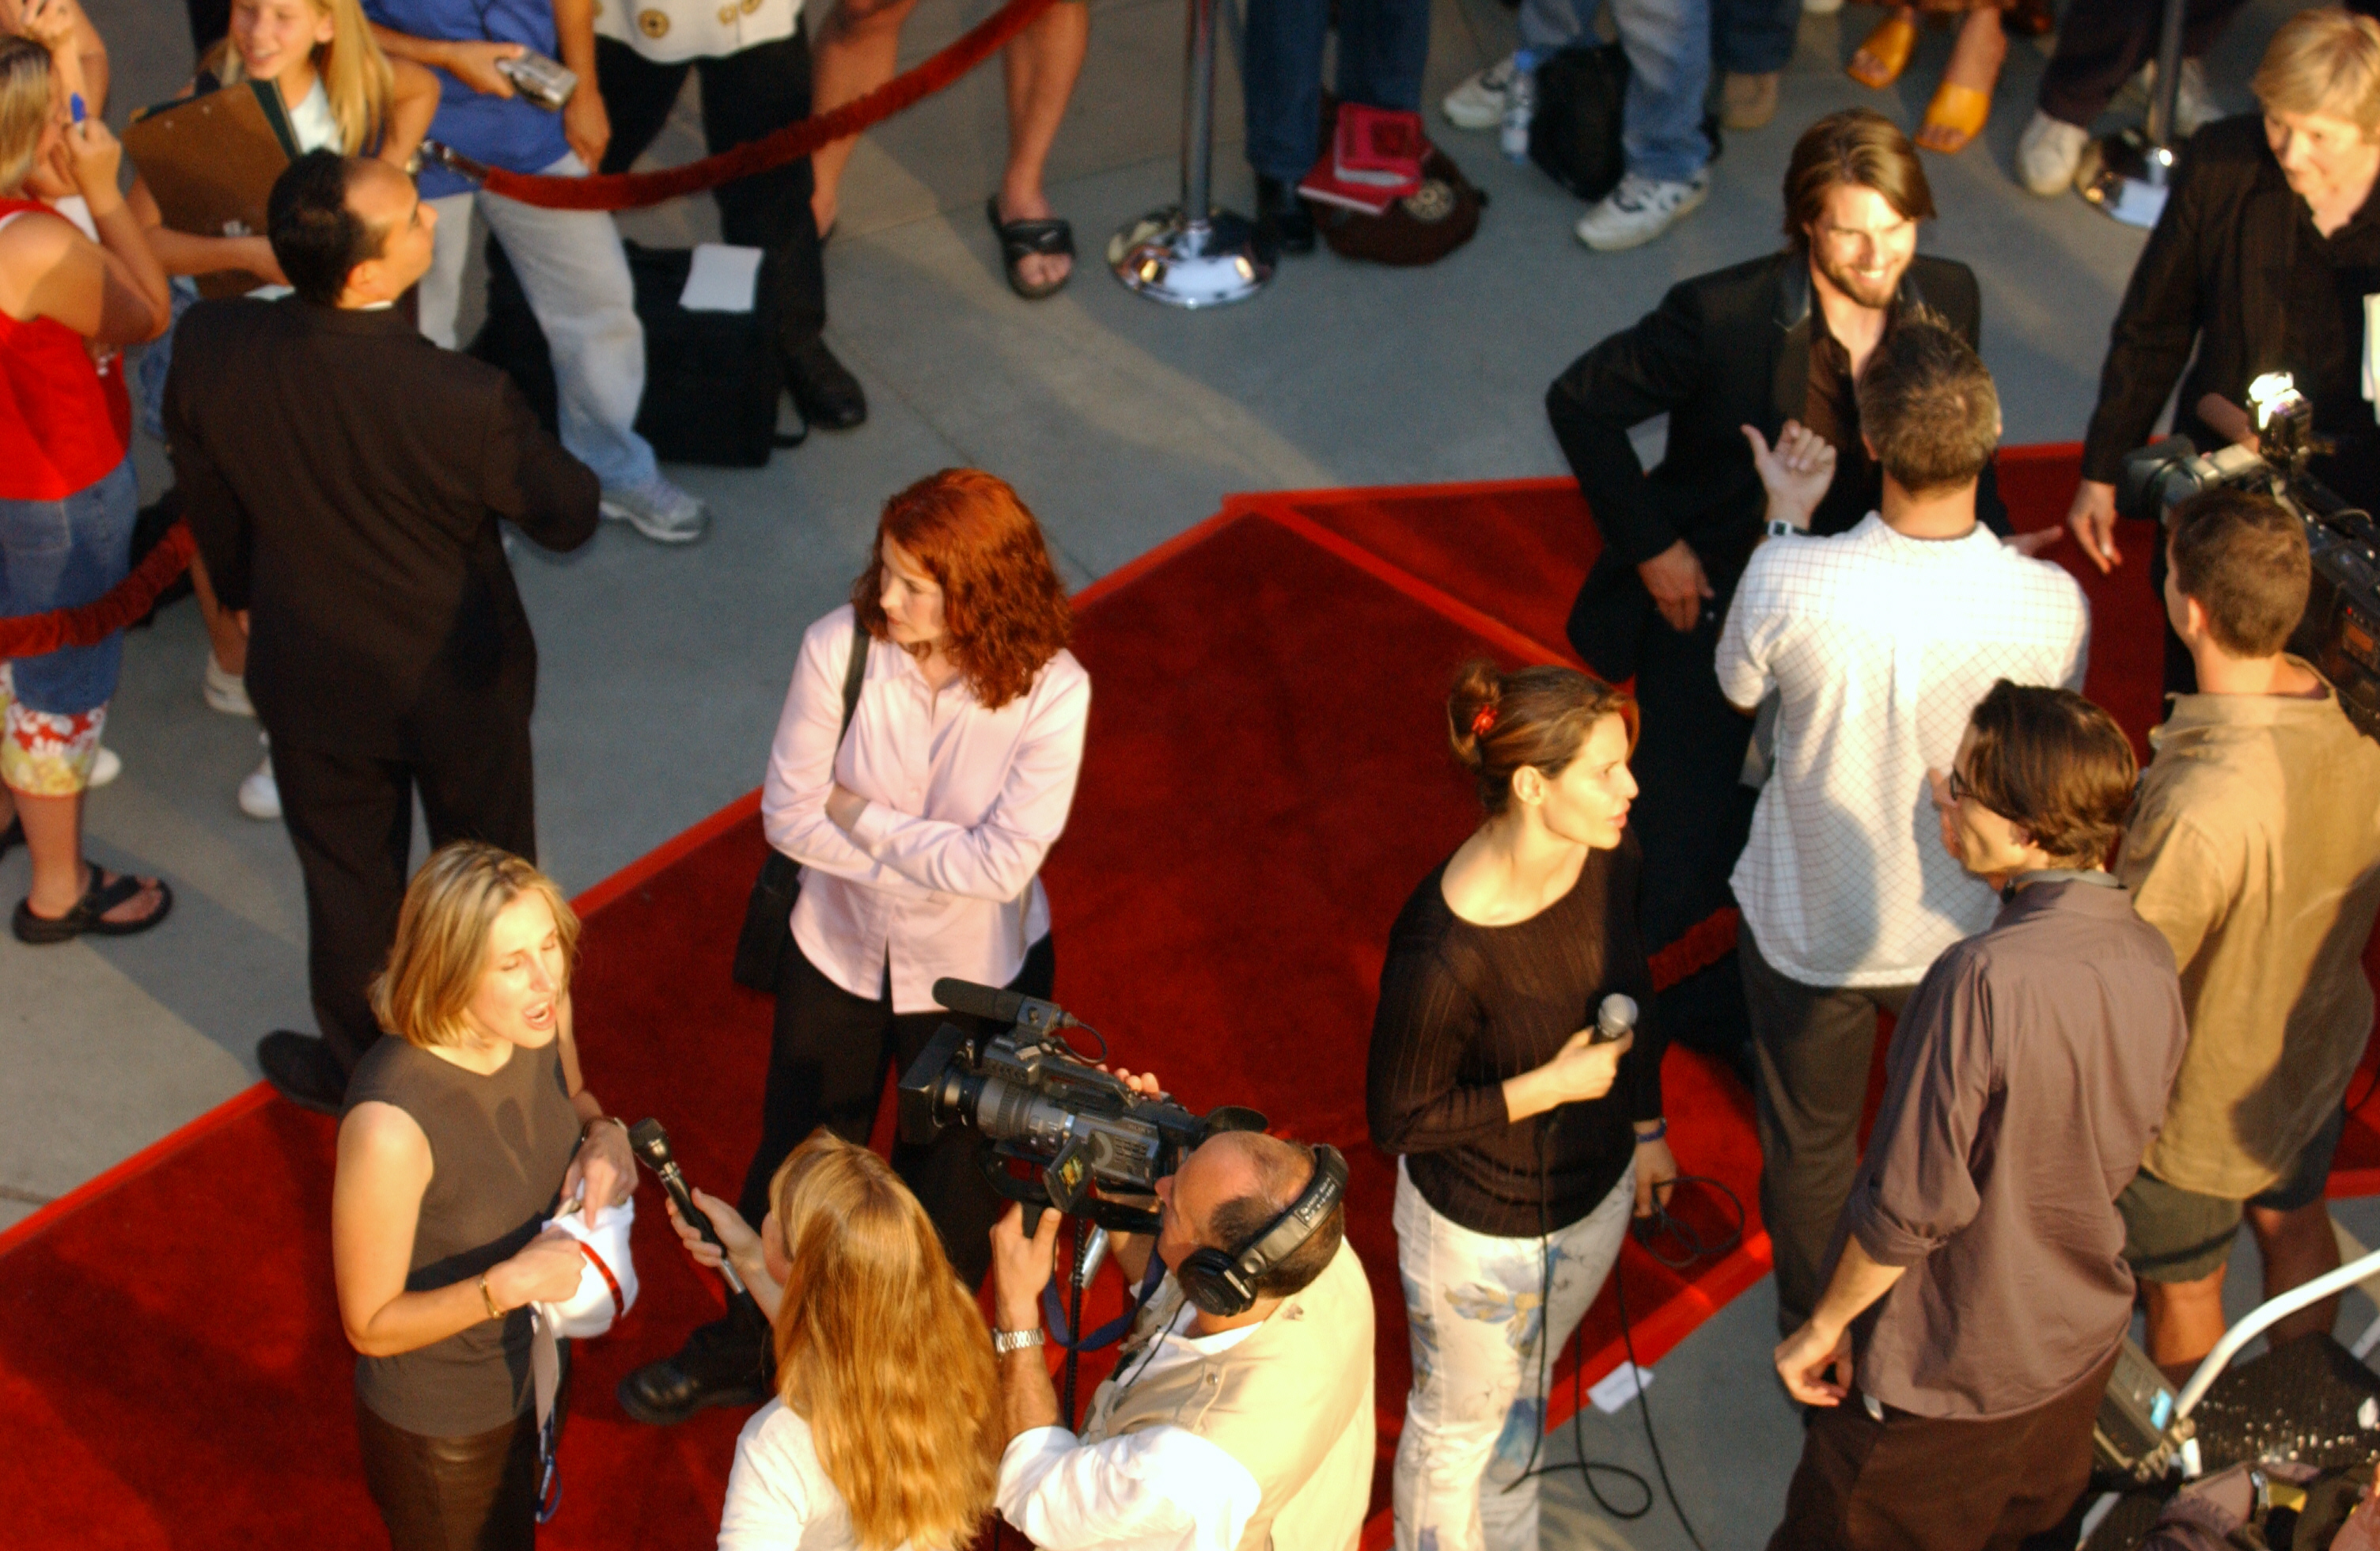 Hollywood Film Festival, ArcLight Cinemas Hollywood along with Tom Cruise